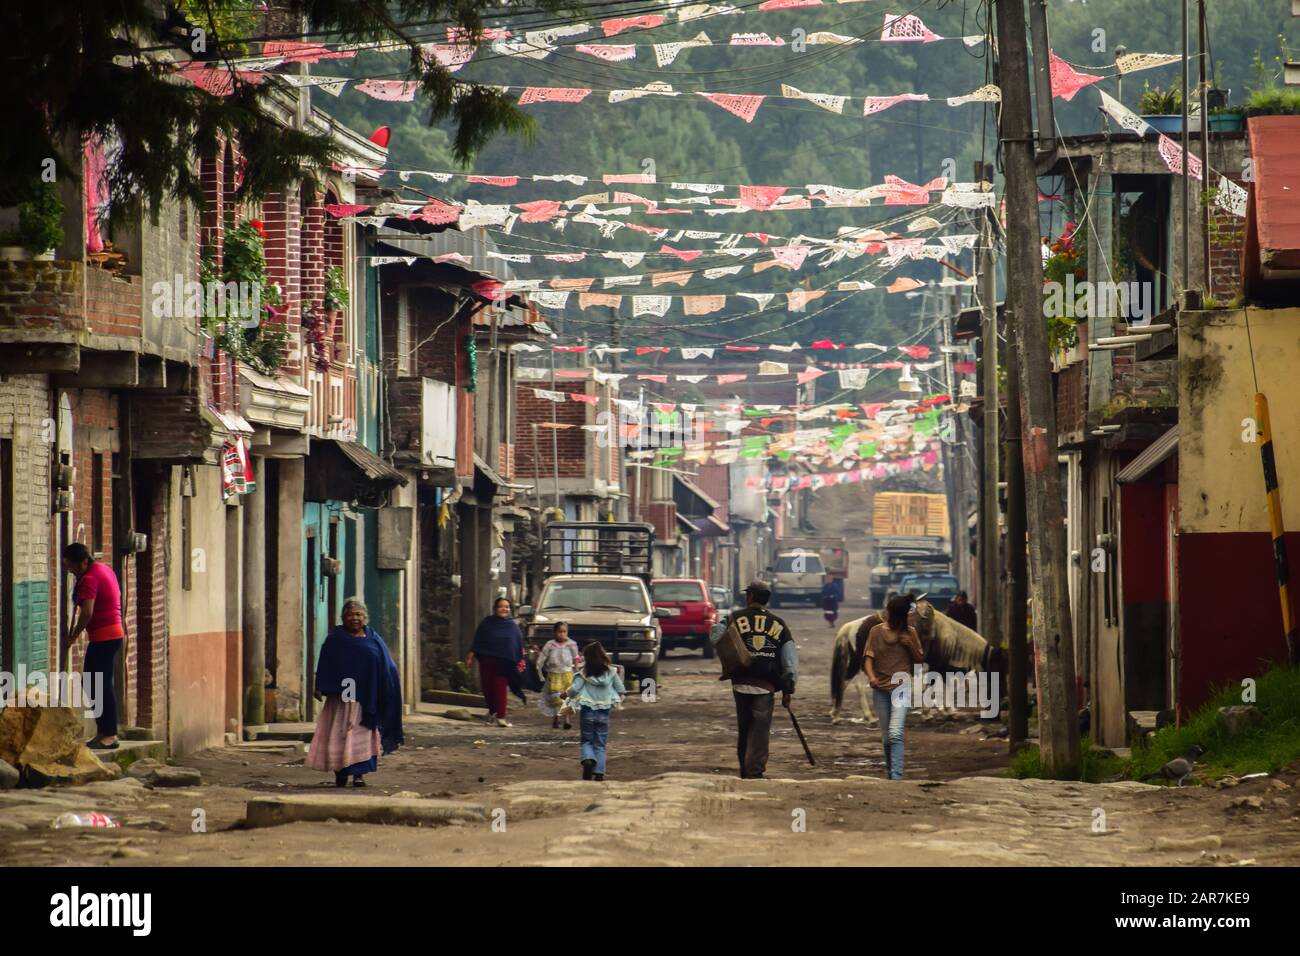 People walking down a dusty street beneath bunting flags, Paricutin, Mexico Stock Photo